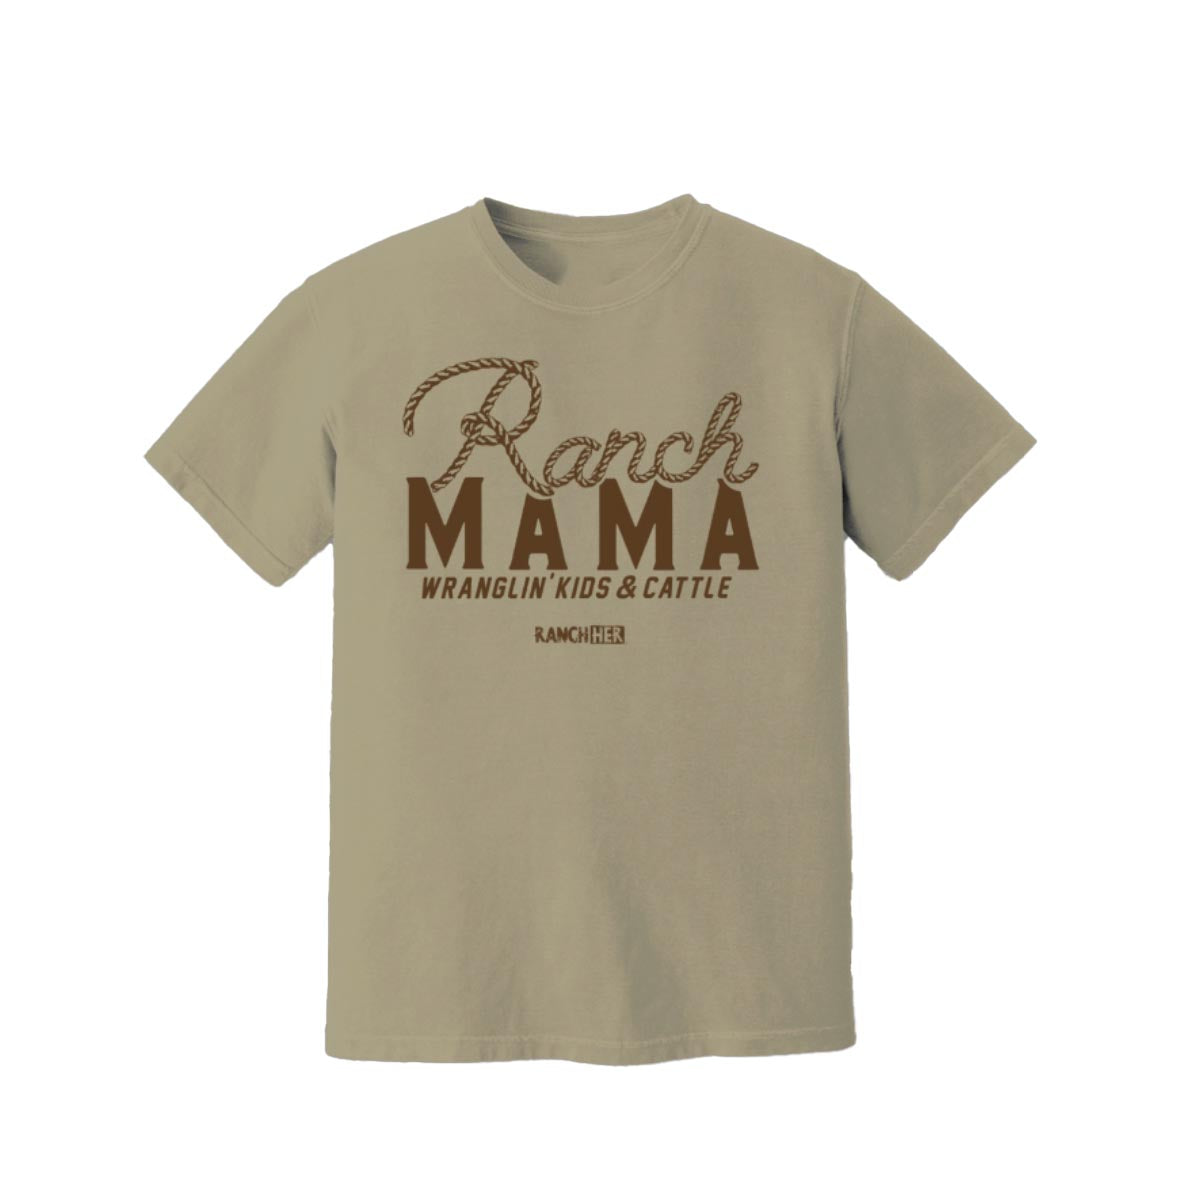 "Ranch Mama" Wranglin' Kids & Cattle T-Shirt